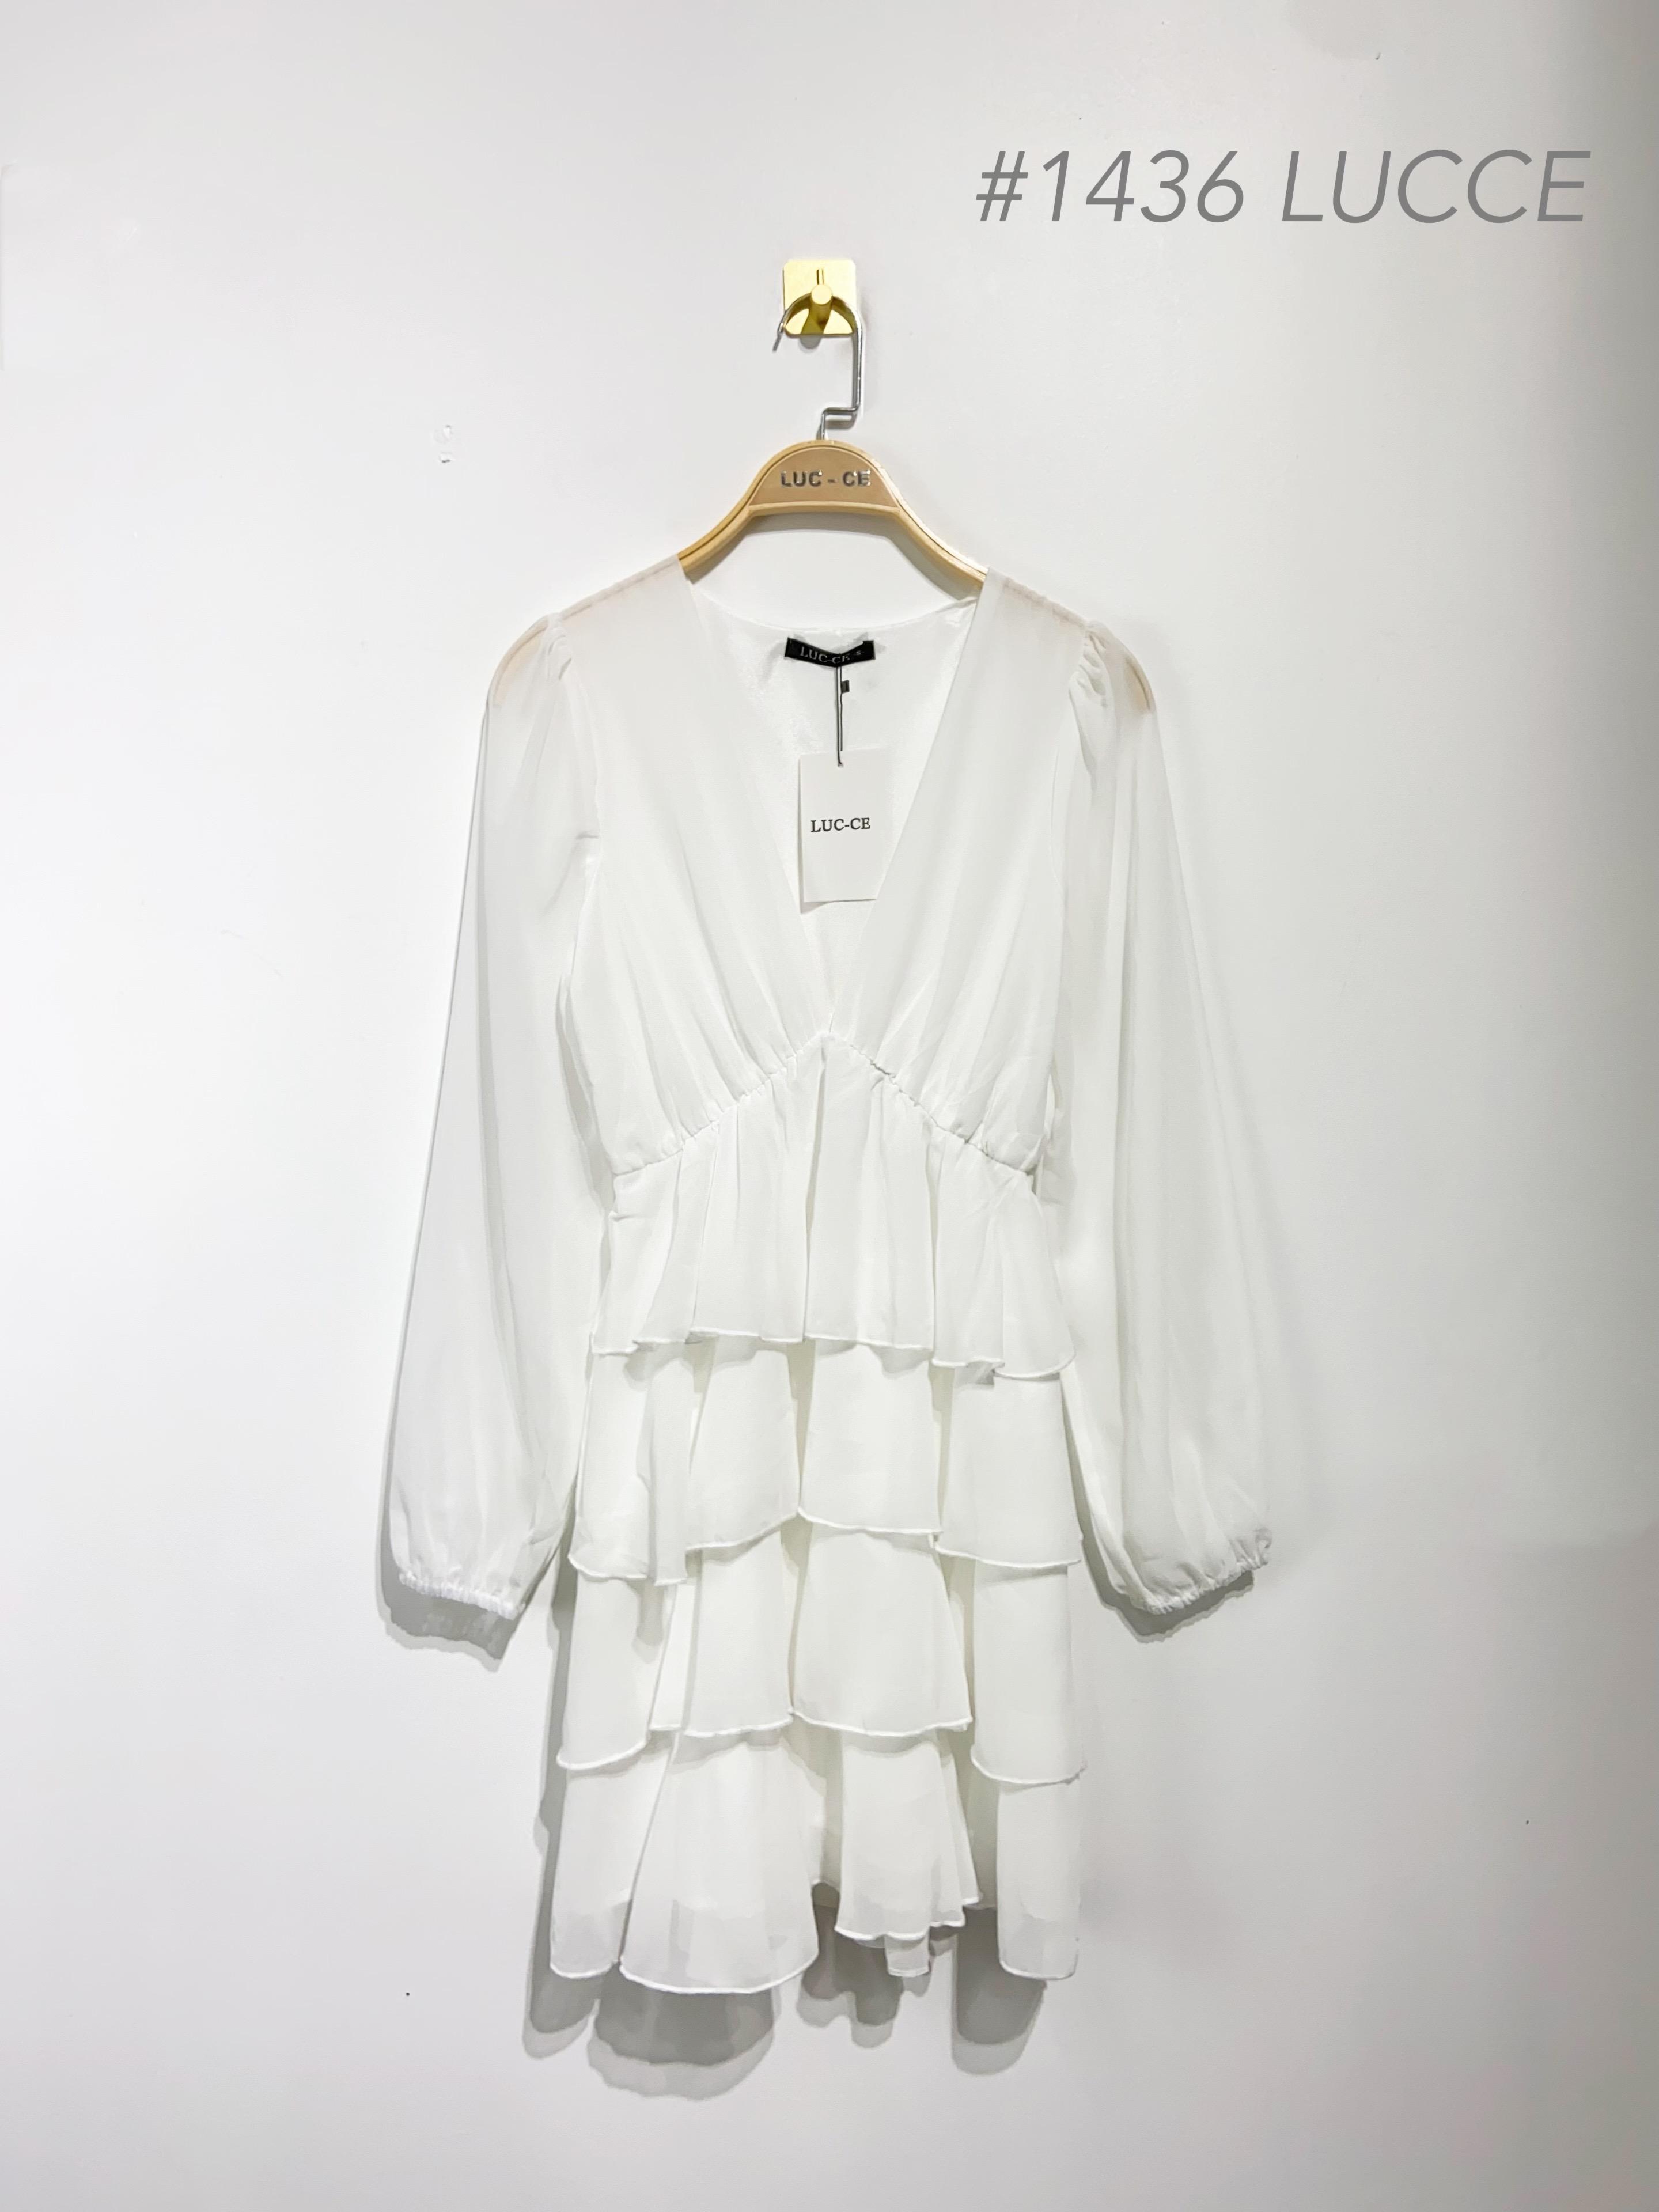 Vestidos cortos Mujer White Luc-ce 1436 #c Efashion Paris